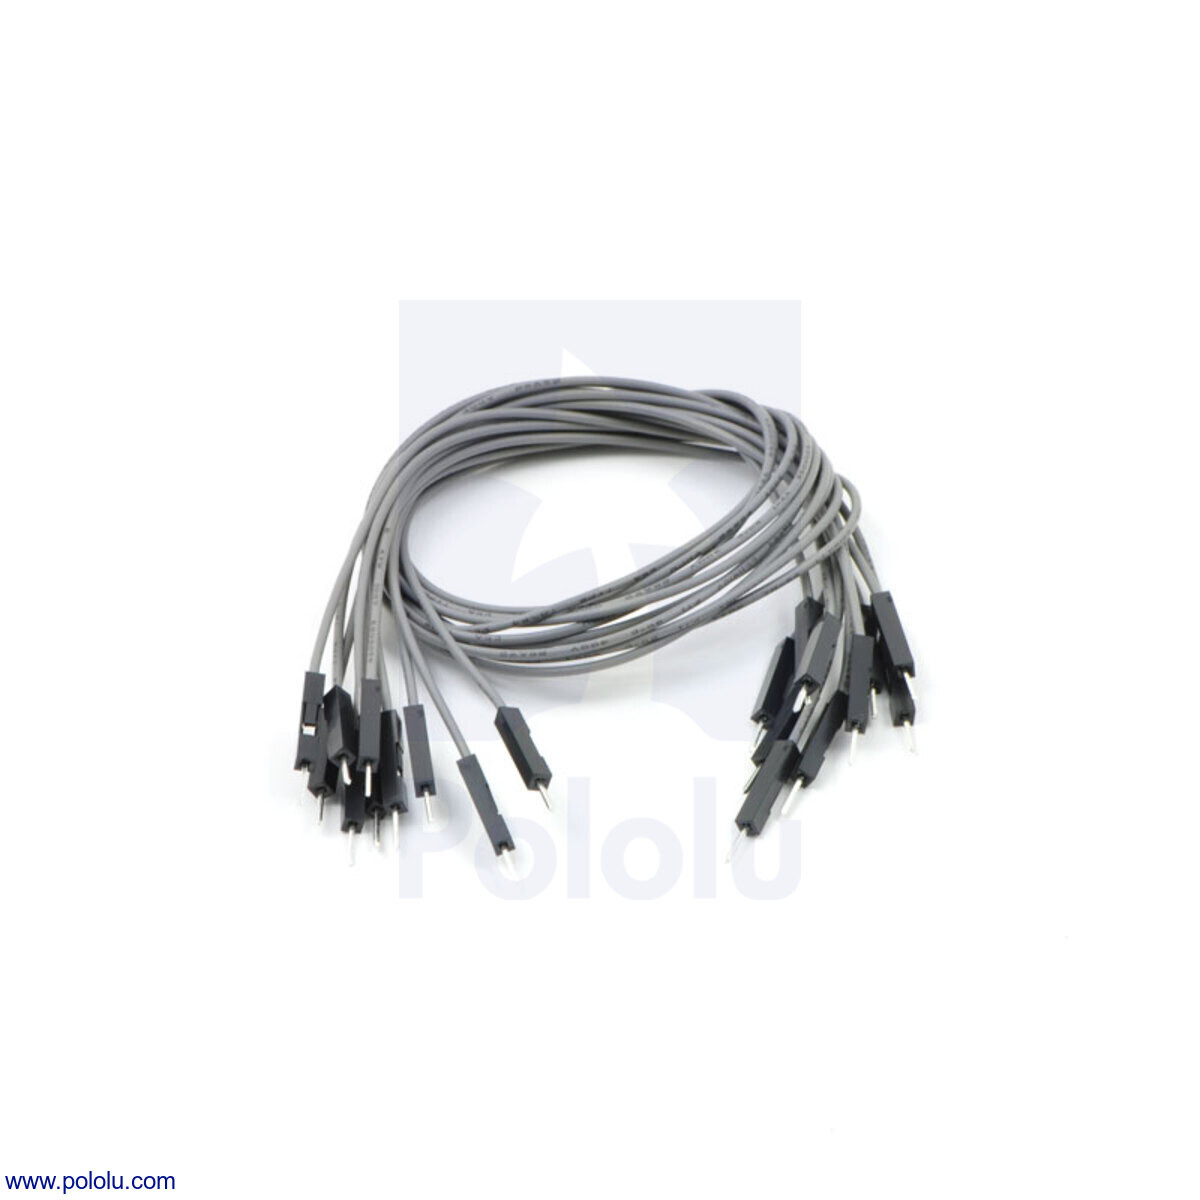 Pololu - Ribbon Cable Premium Jumper Wires 10-Color M-M 12 (30 cm)